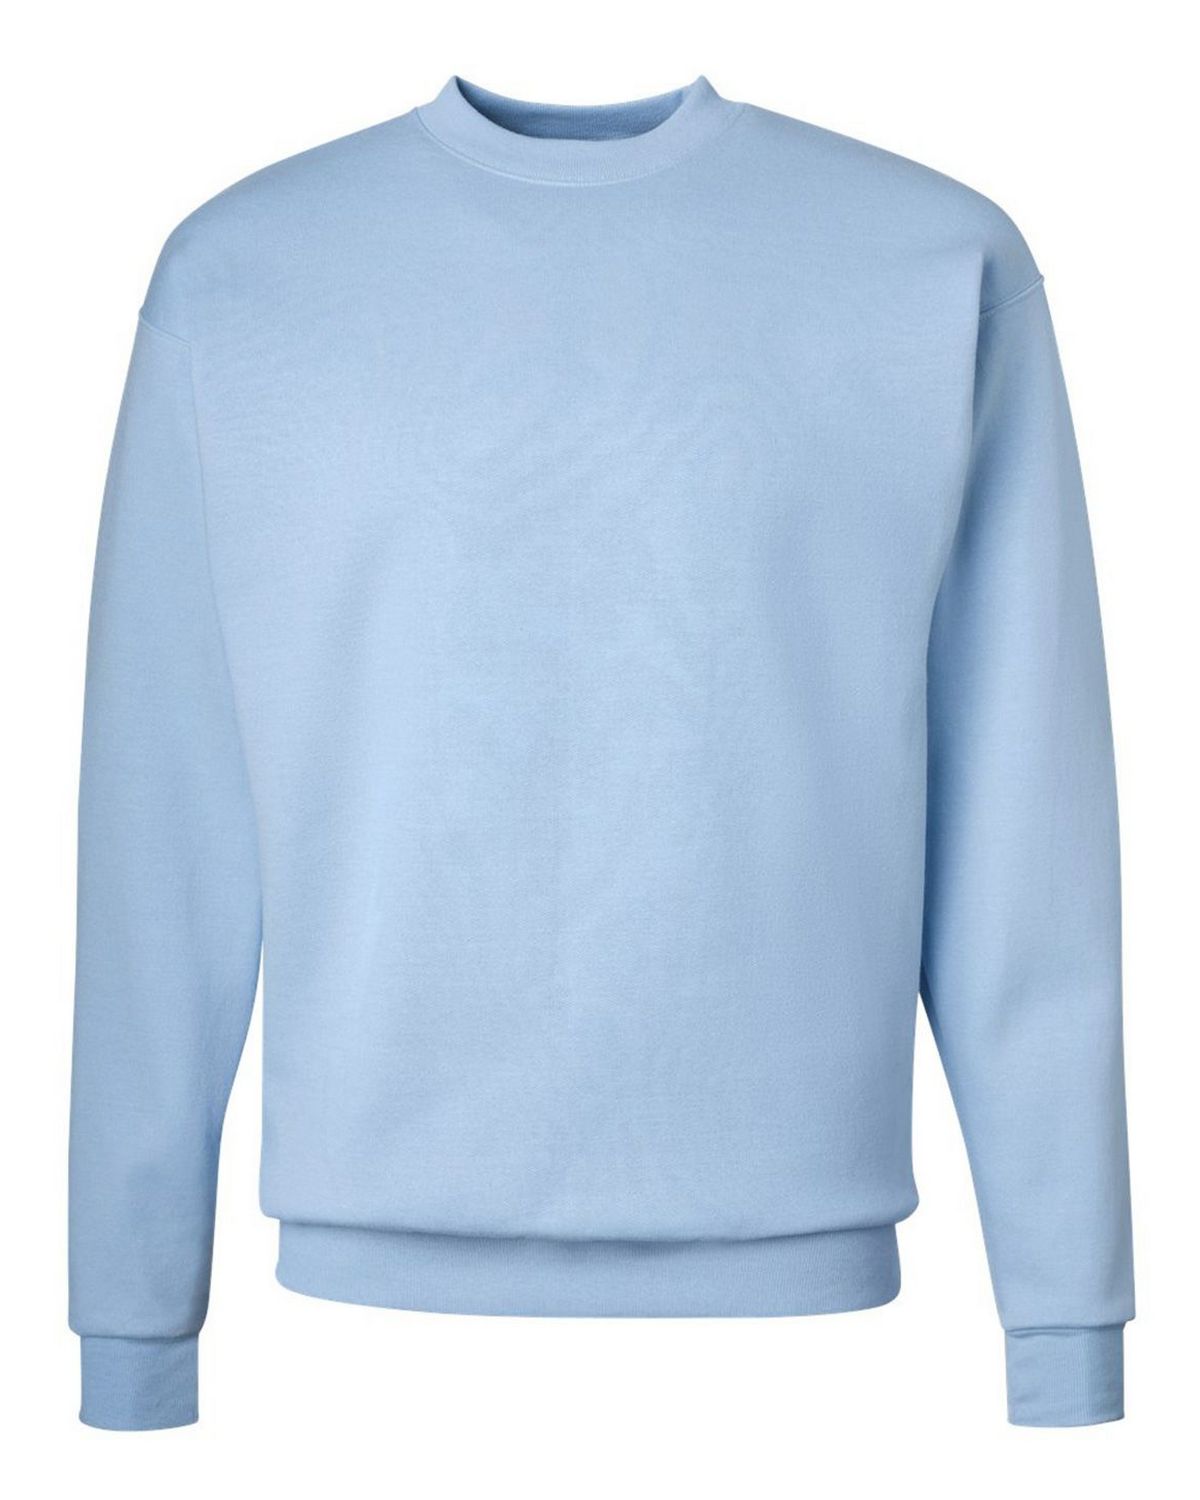 Hanes P160 Adult Sweatshirt - Shop at ApparelnBags.com